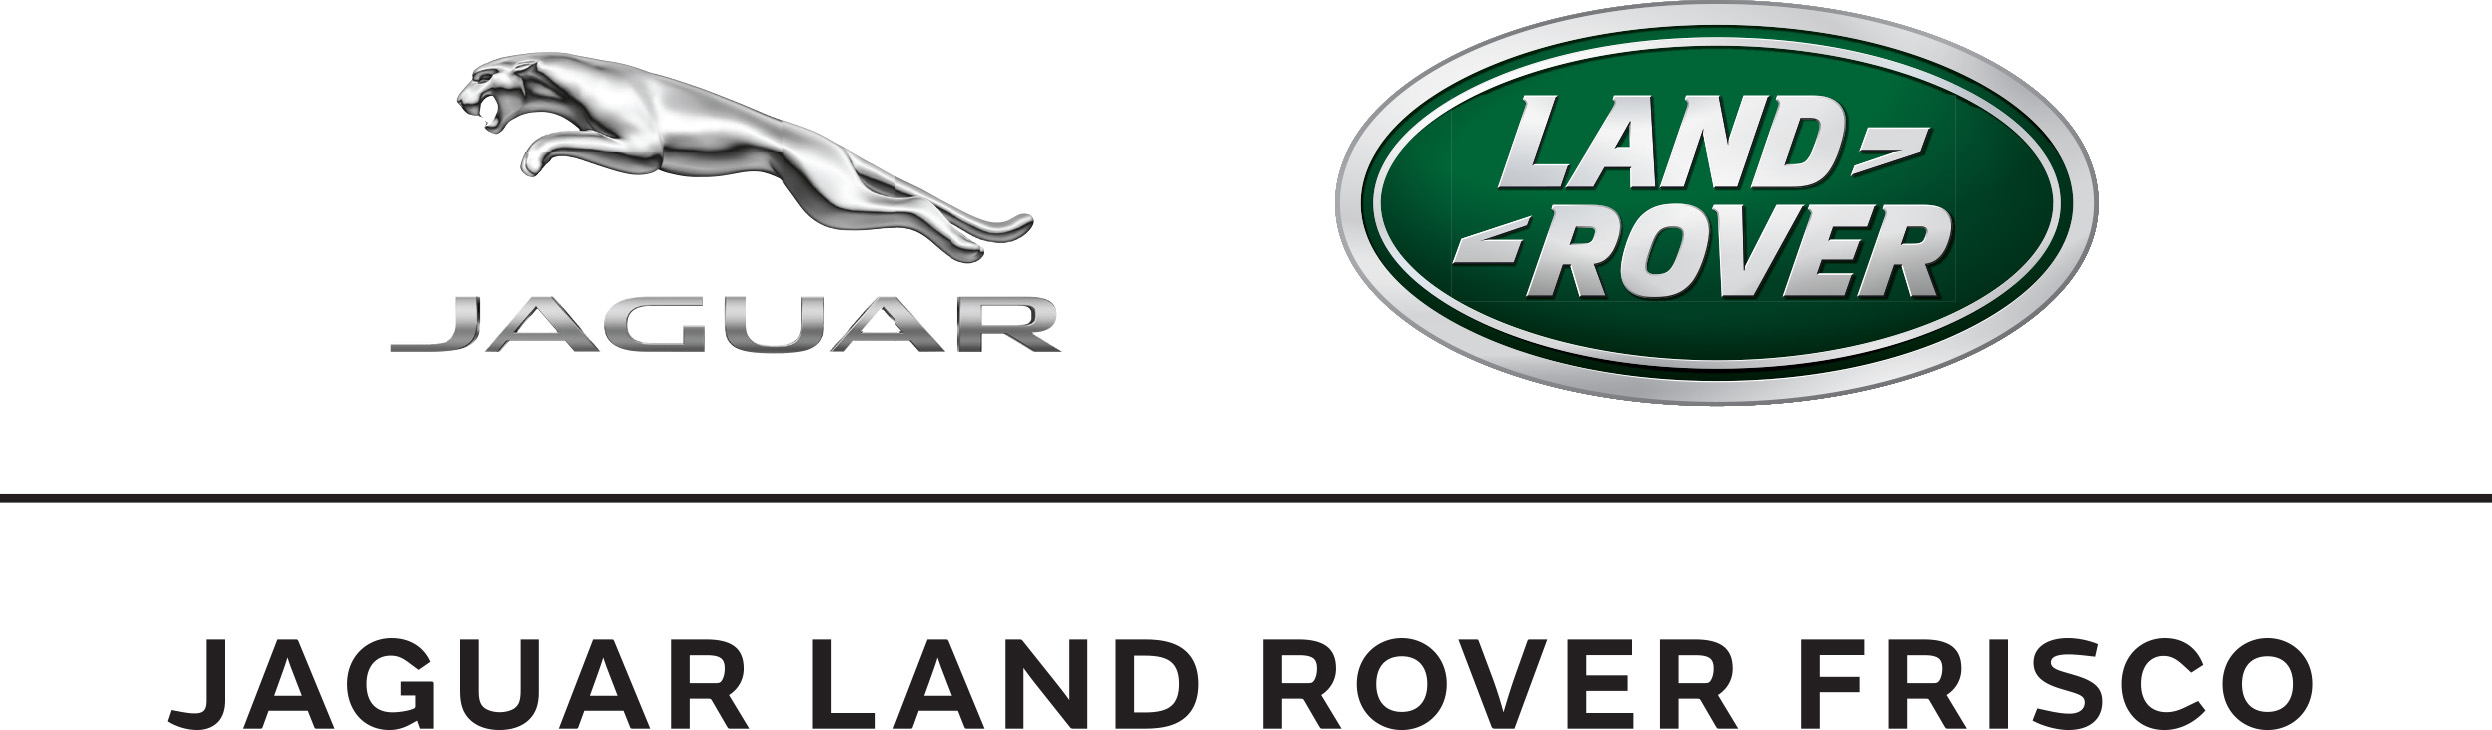 Jaguar Land Rover Frisco